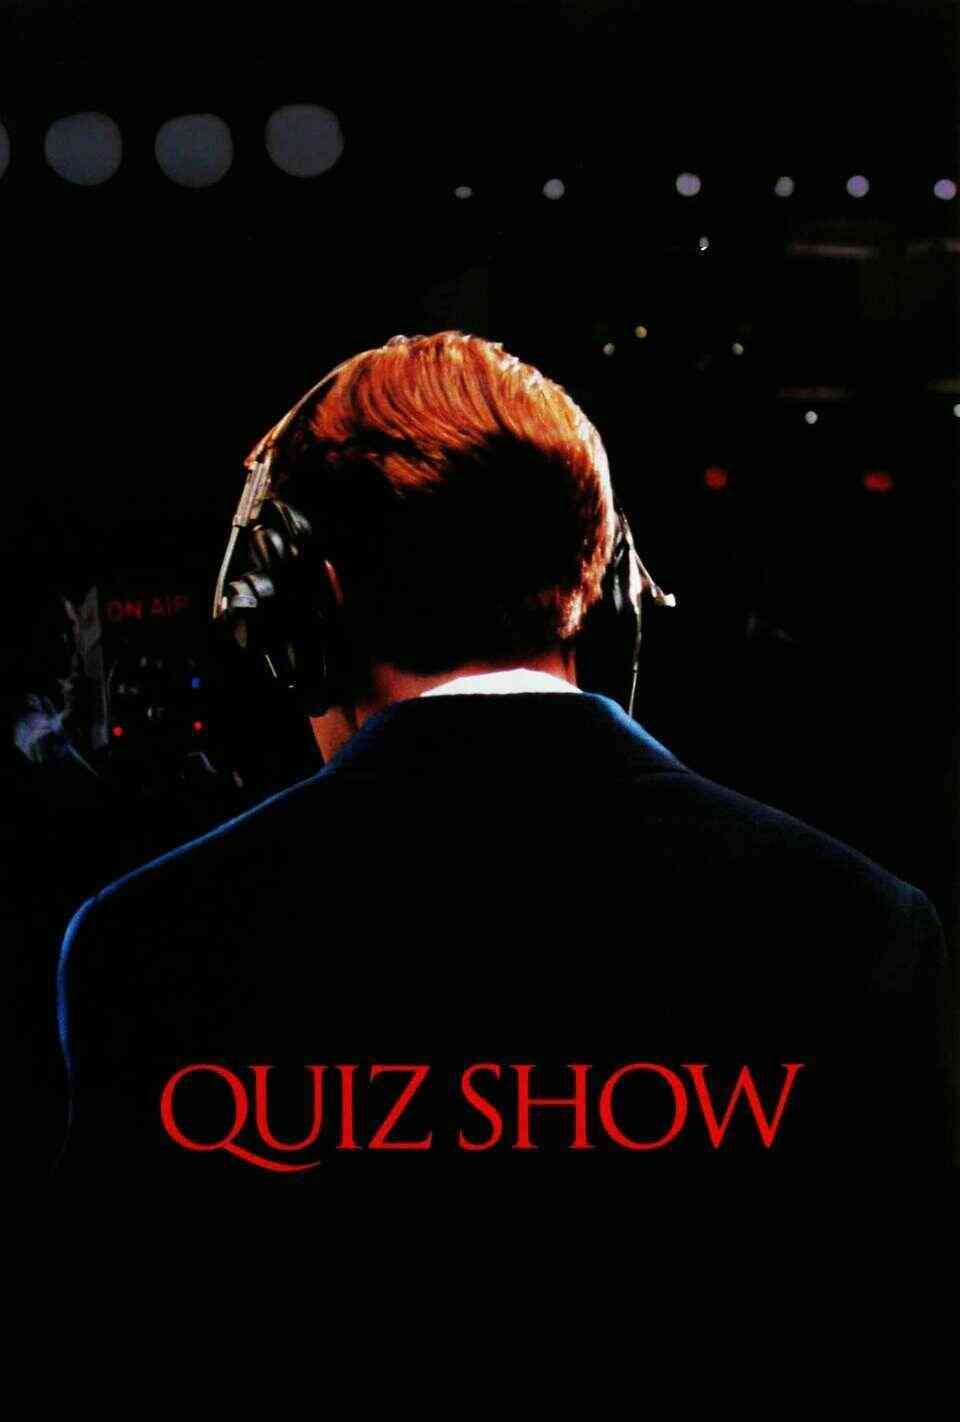 Read Quiz Show screenplay (poster)